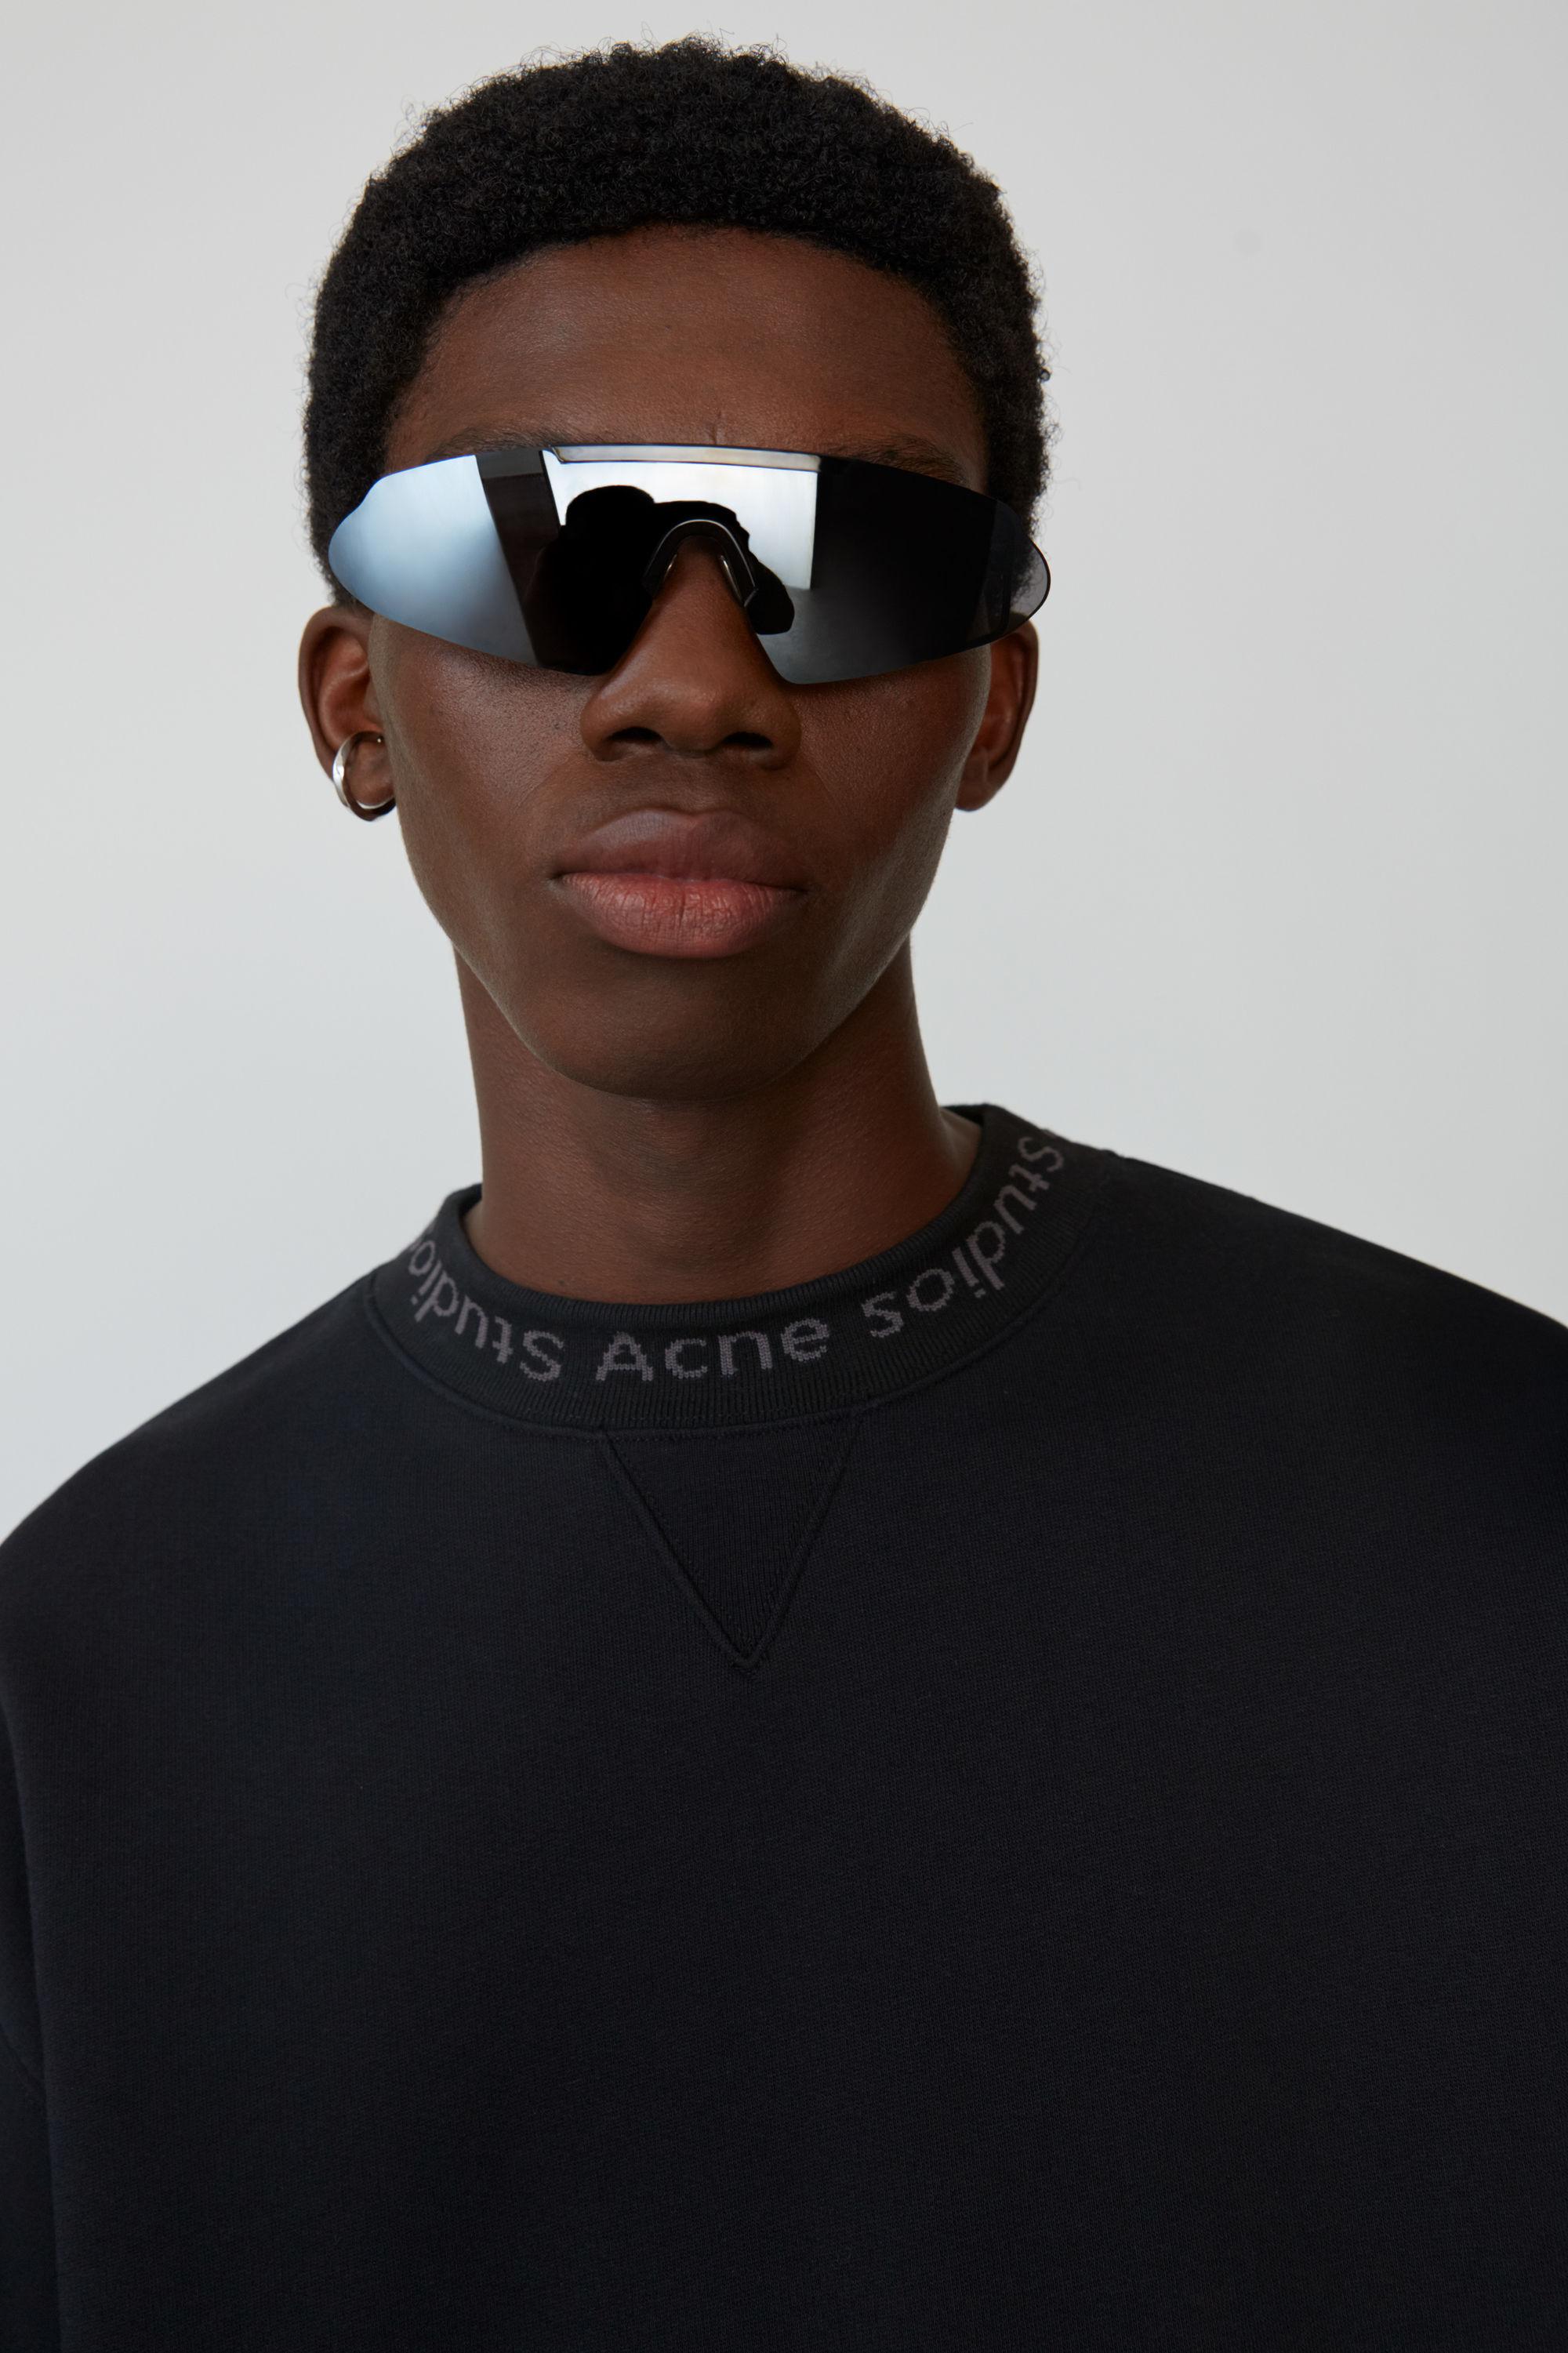 Acne Studios Cotton Flogho Black Logo Crewneck Sweatshirt for Men - Lyst